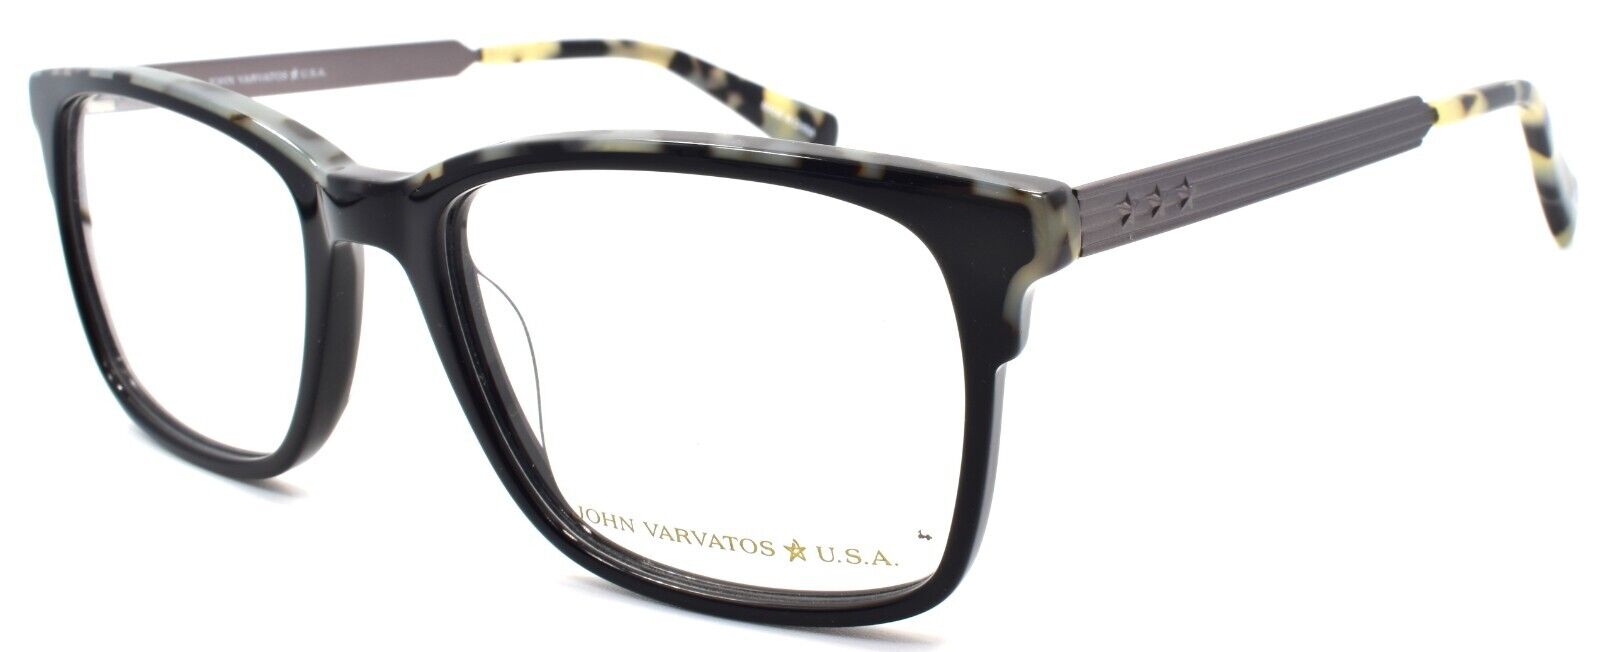 1-John Varvatos VJVC001 Men's Eyeglasses Frames 53-18-145 Black-751286356106-IKSpecs